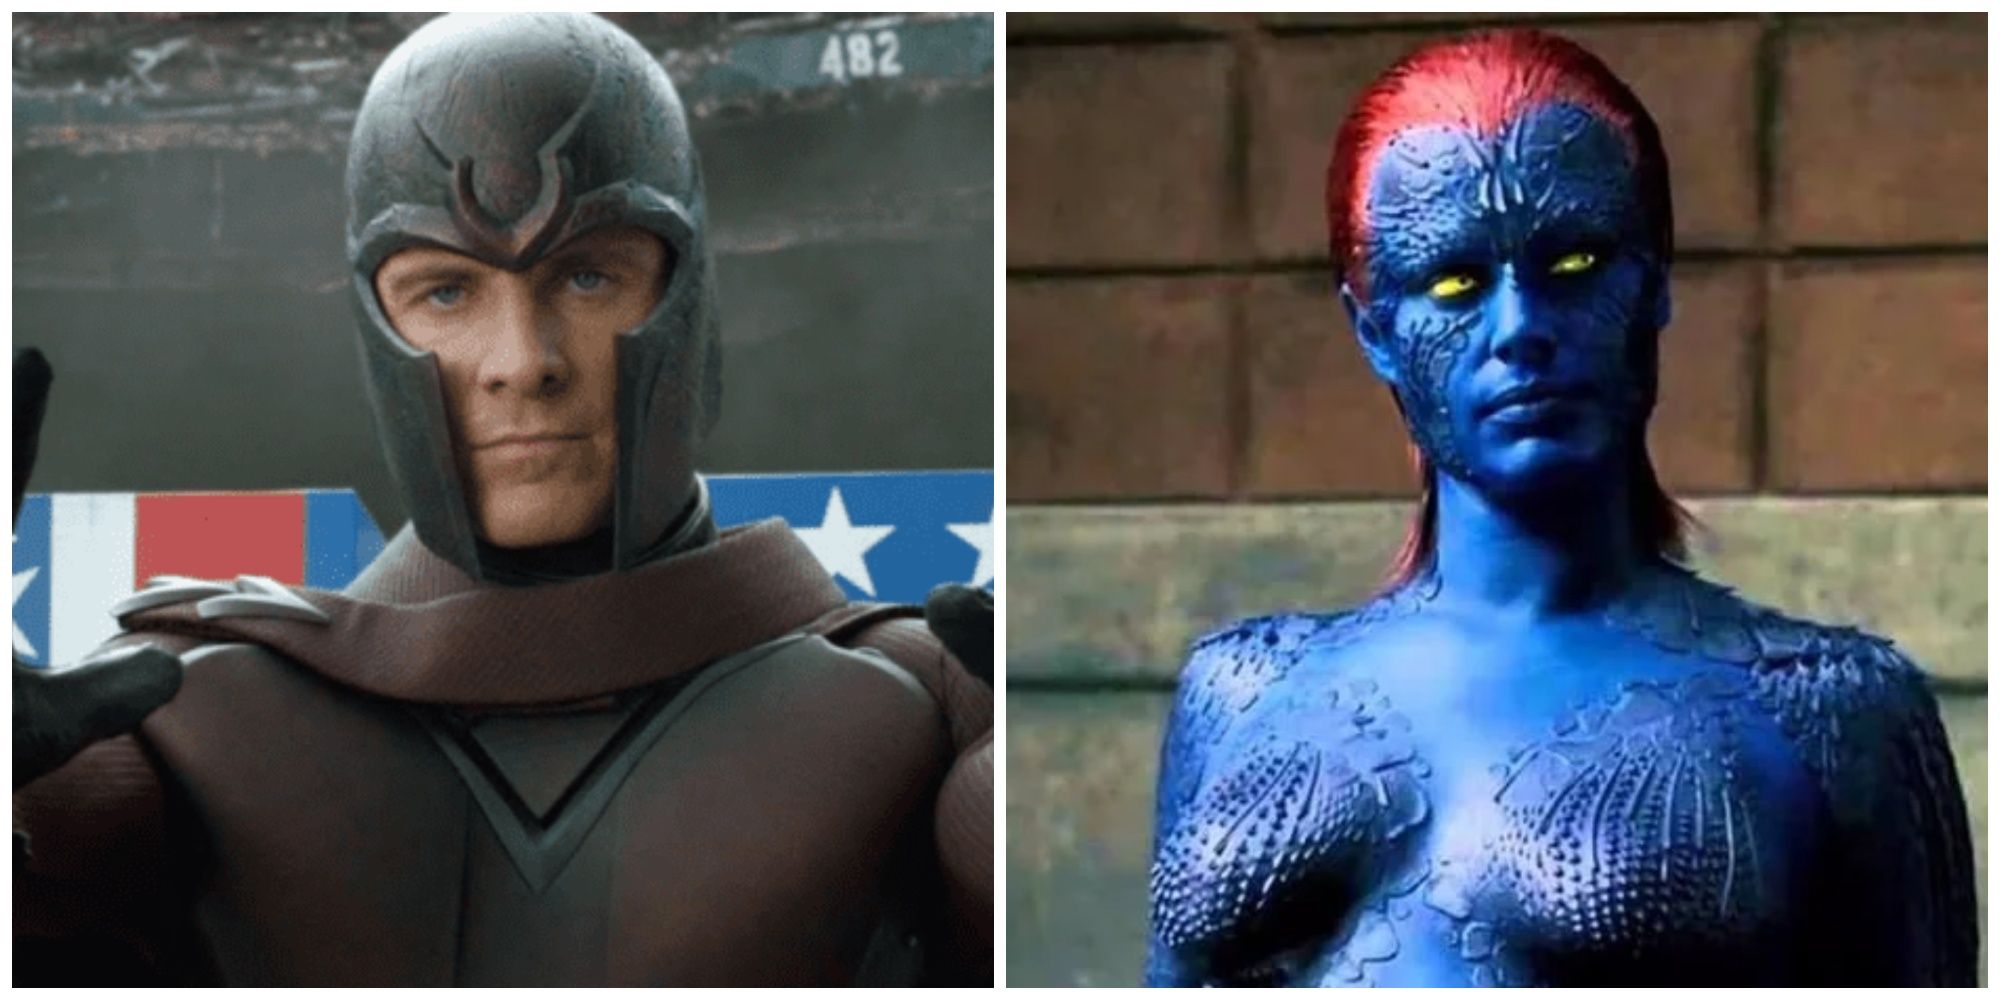 Michael Fassbender as Magneto. Rebecca Romijn as Mystique.